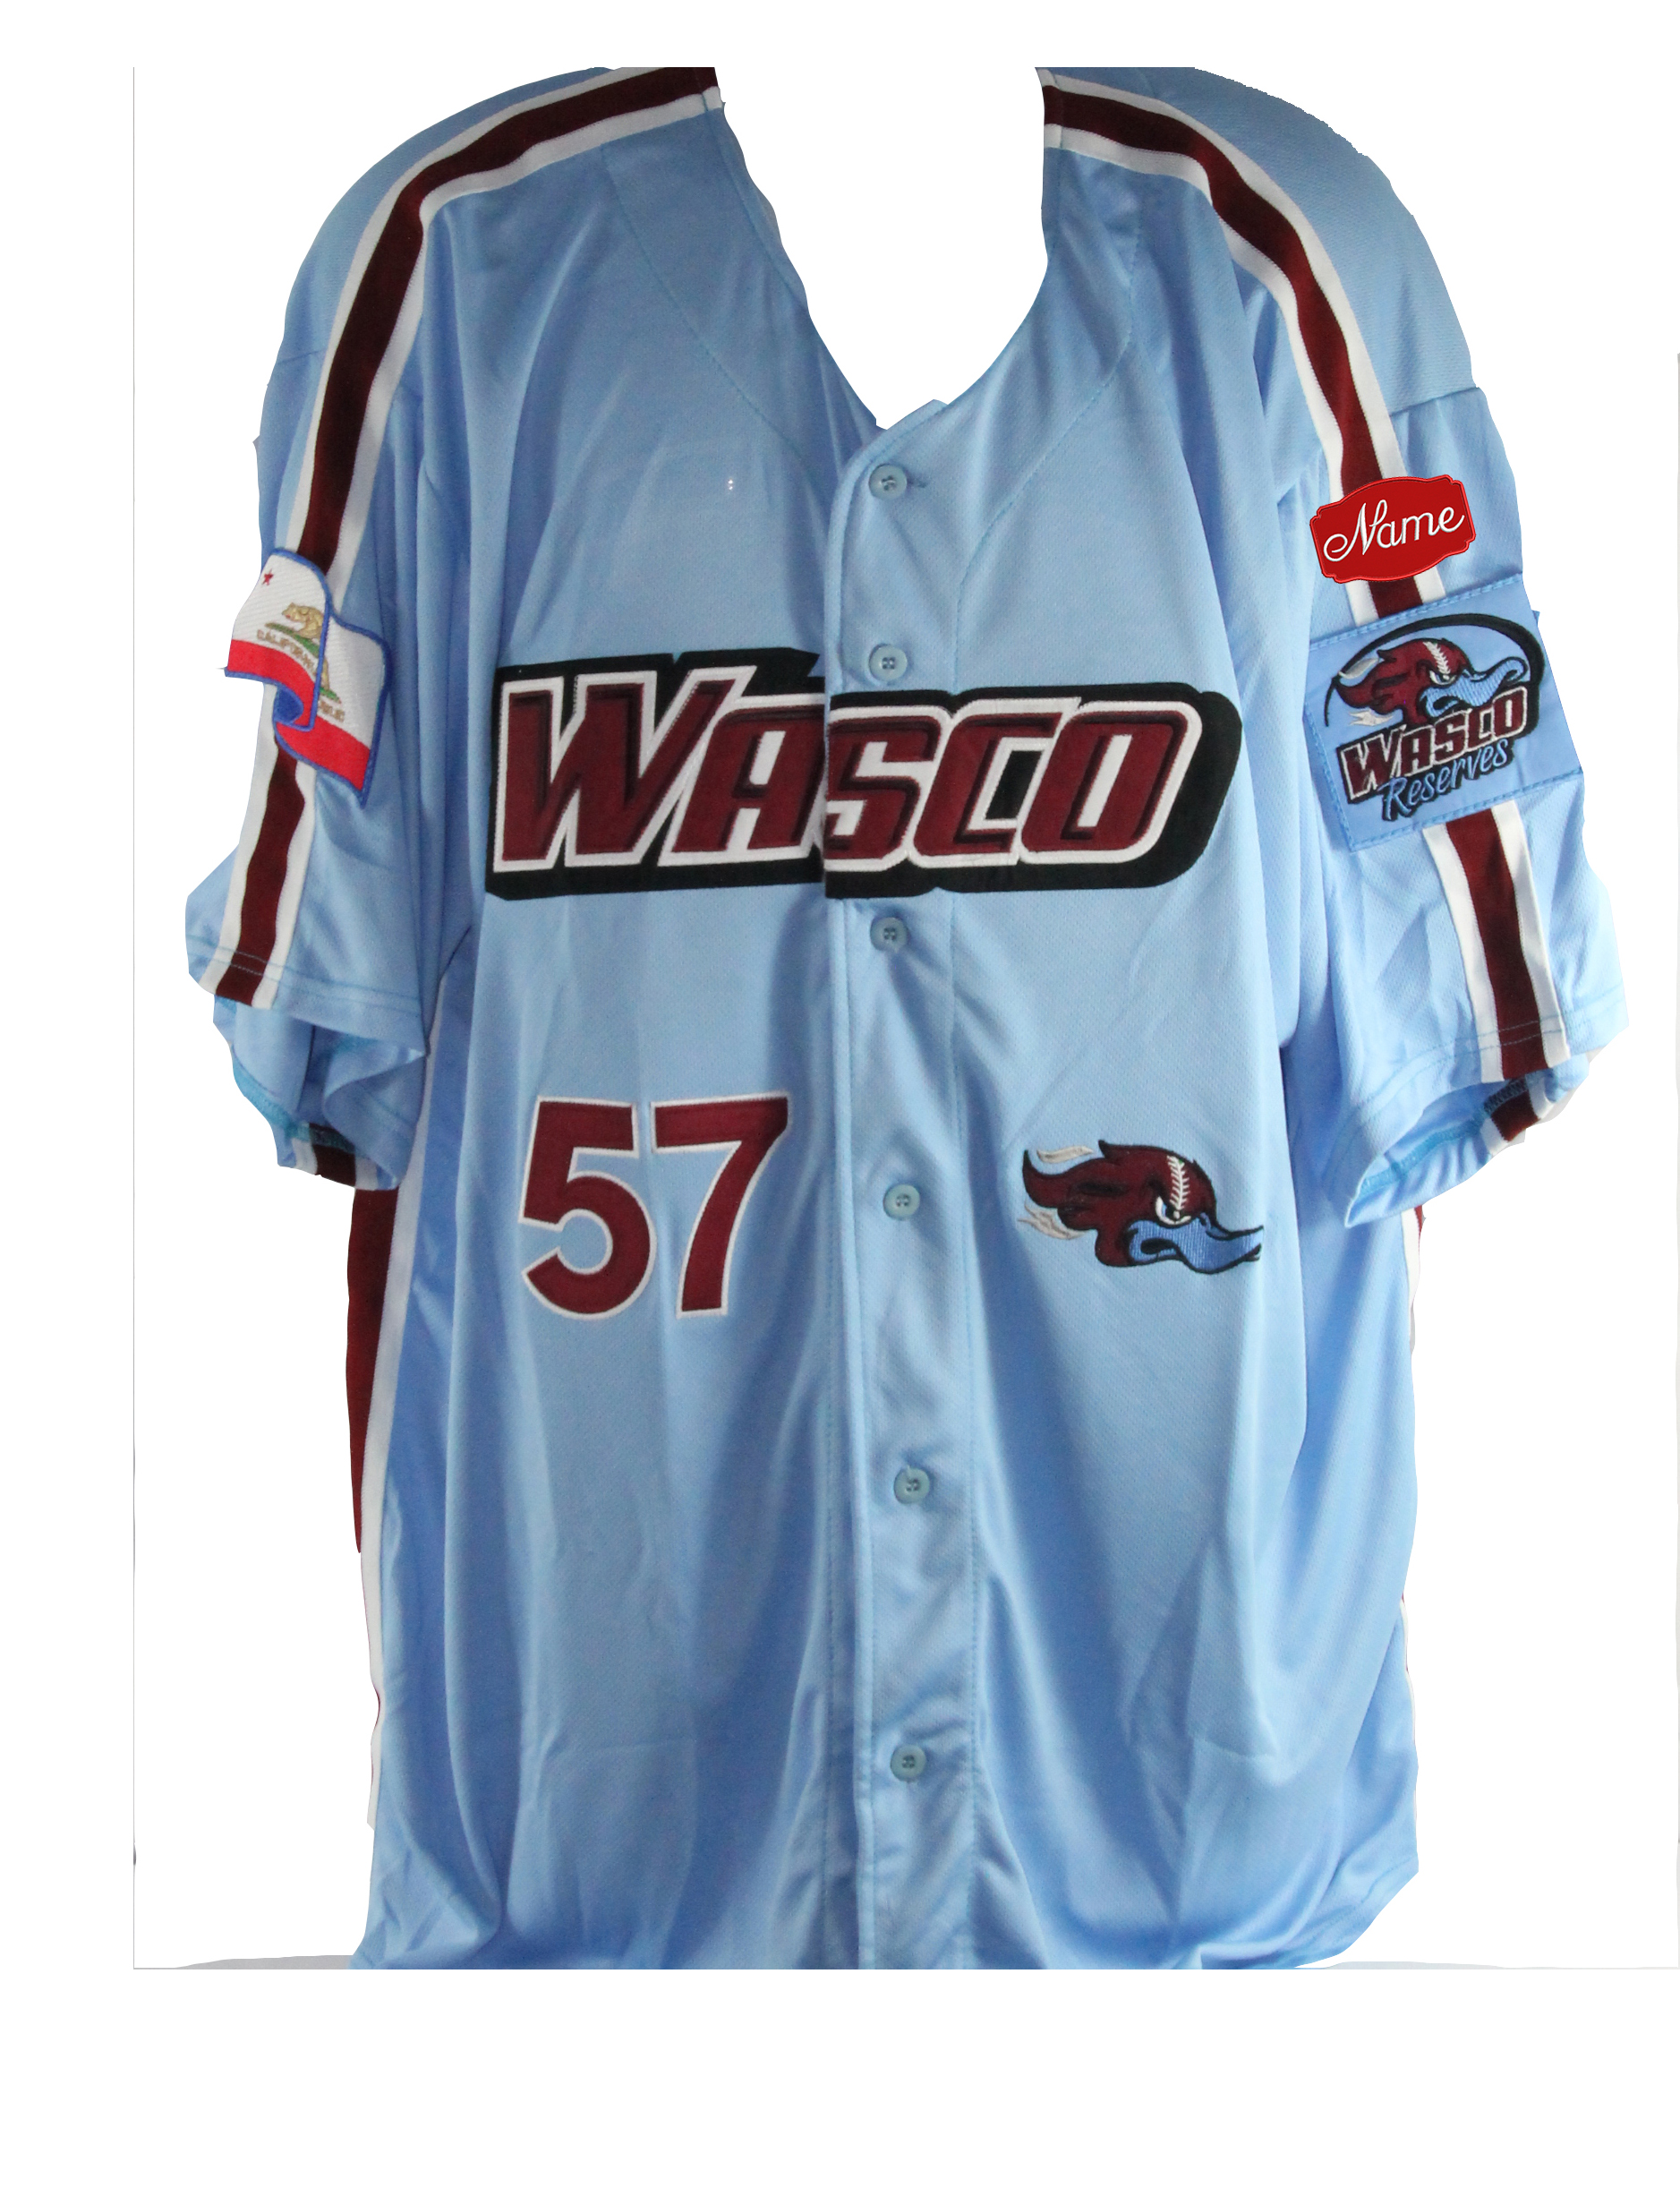 Home of Wasco Reserve Baseball Team! Wasco Reserve Professional